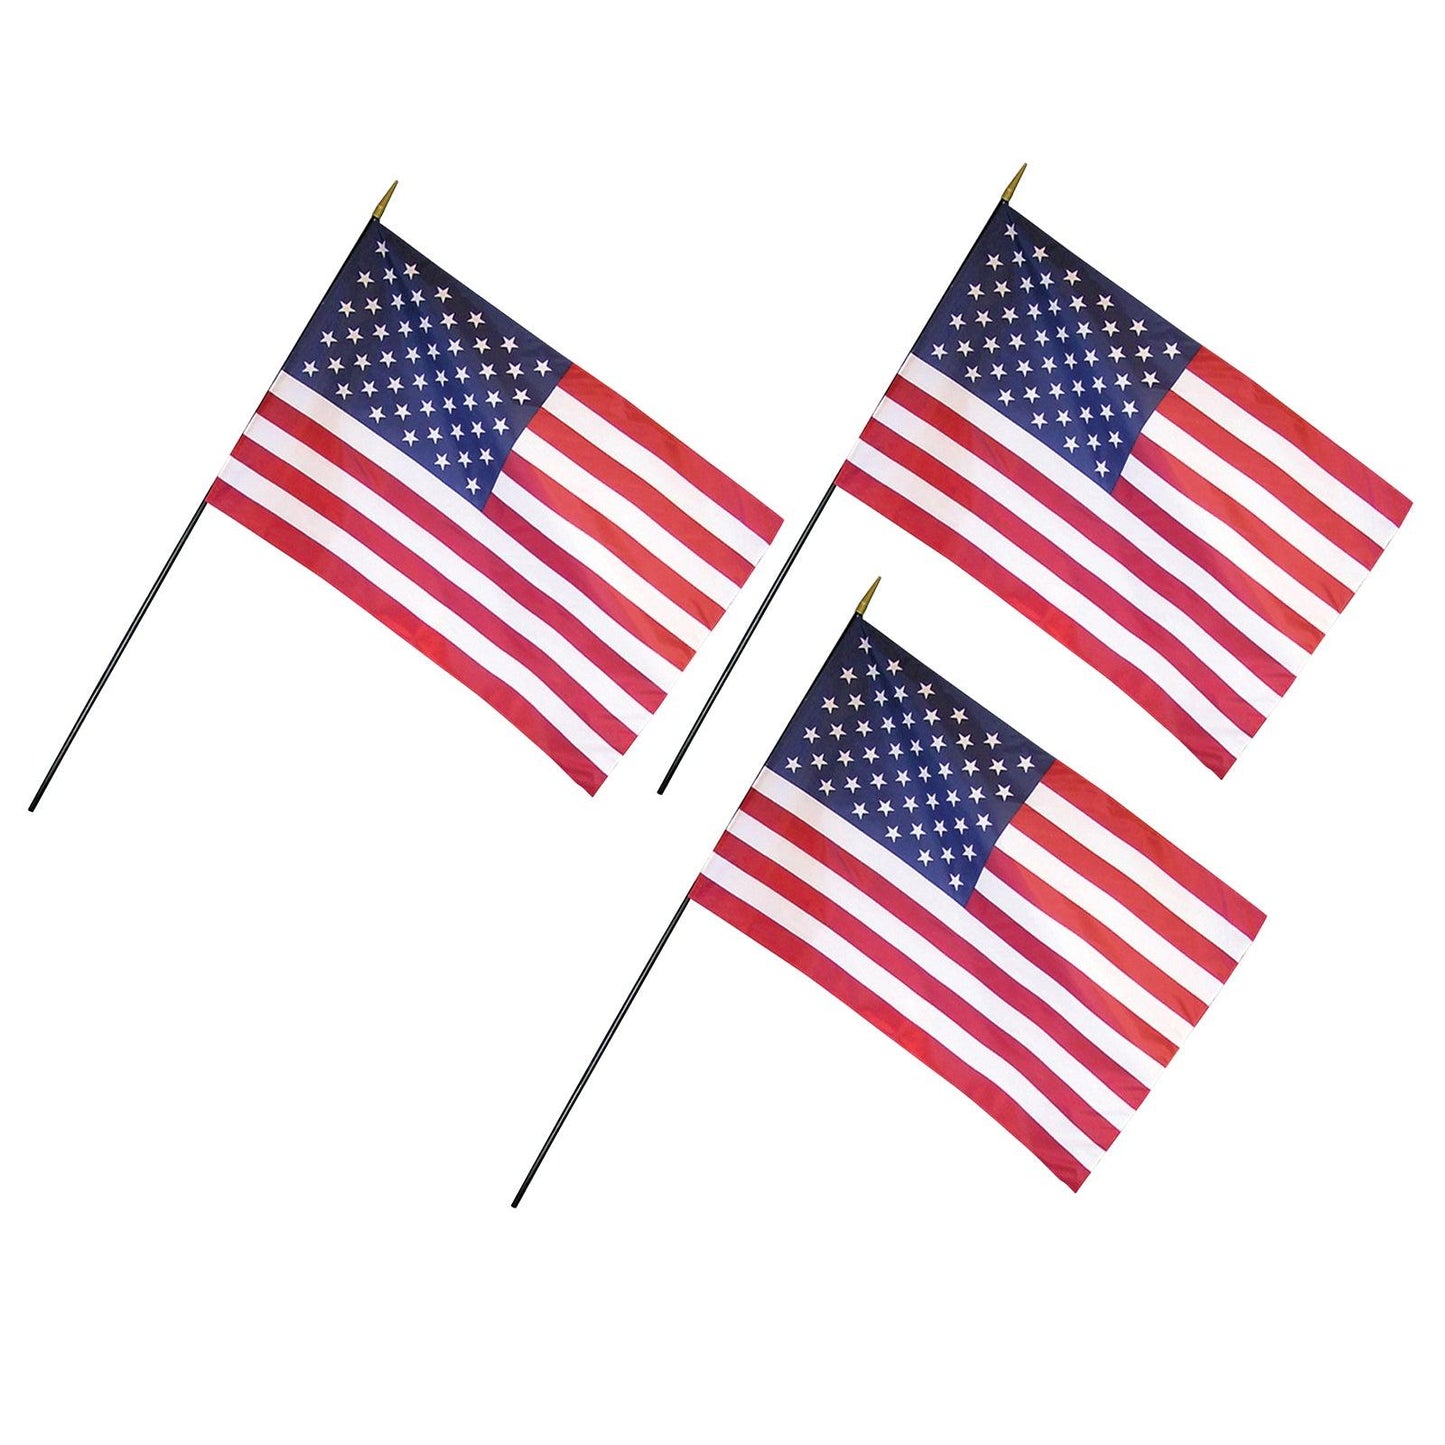 U.S. Classroom Flag with Staff, 12" x 18", Pack of 3 - Loomini